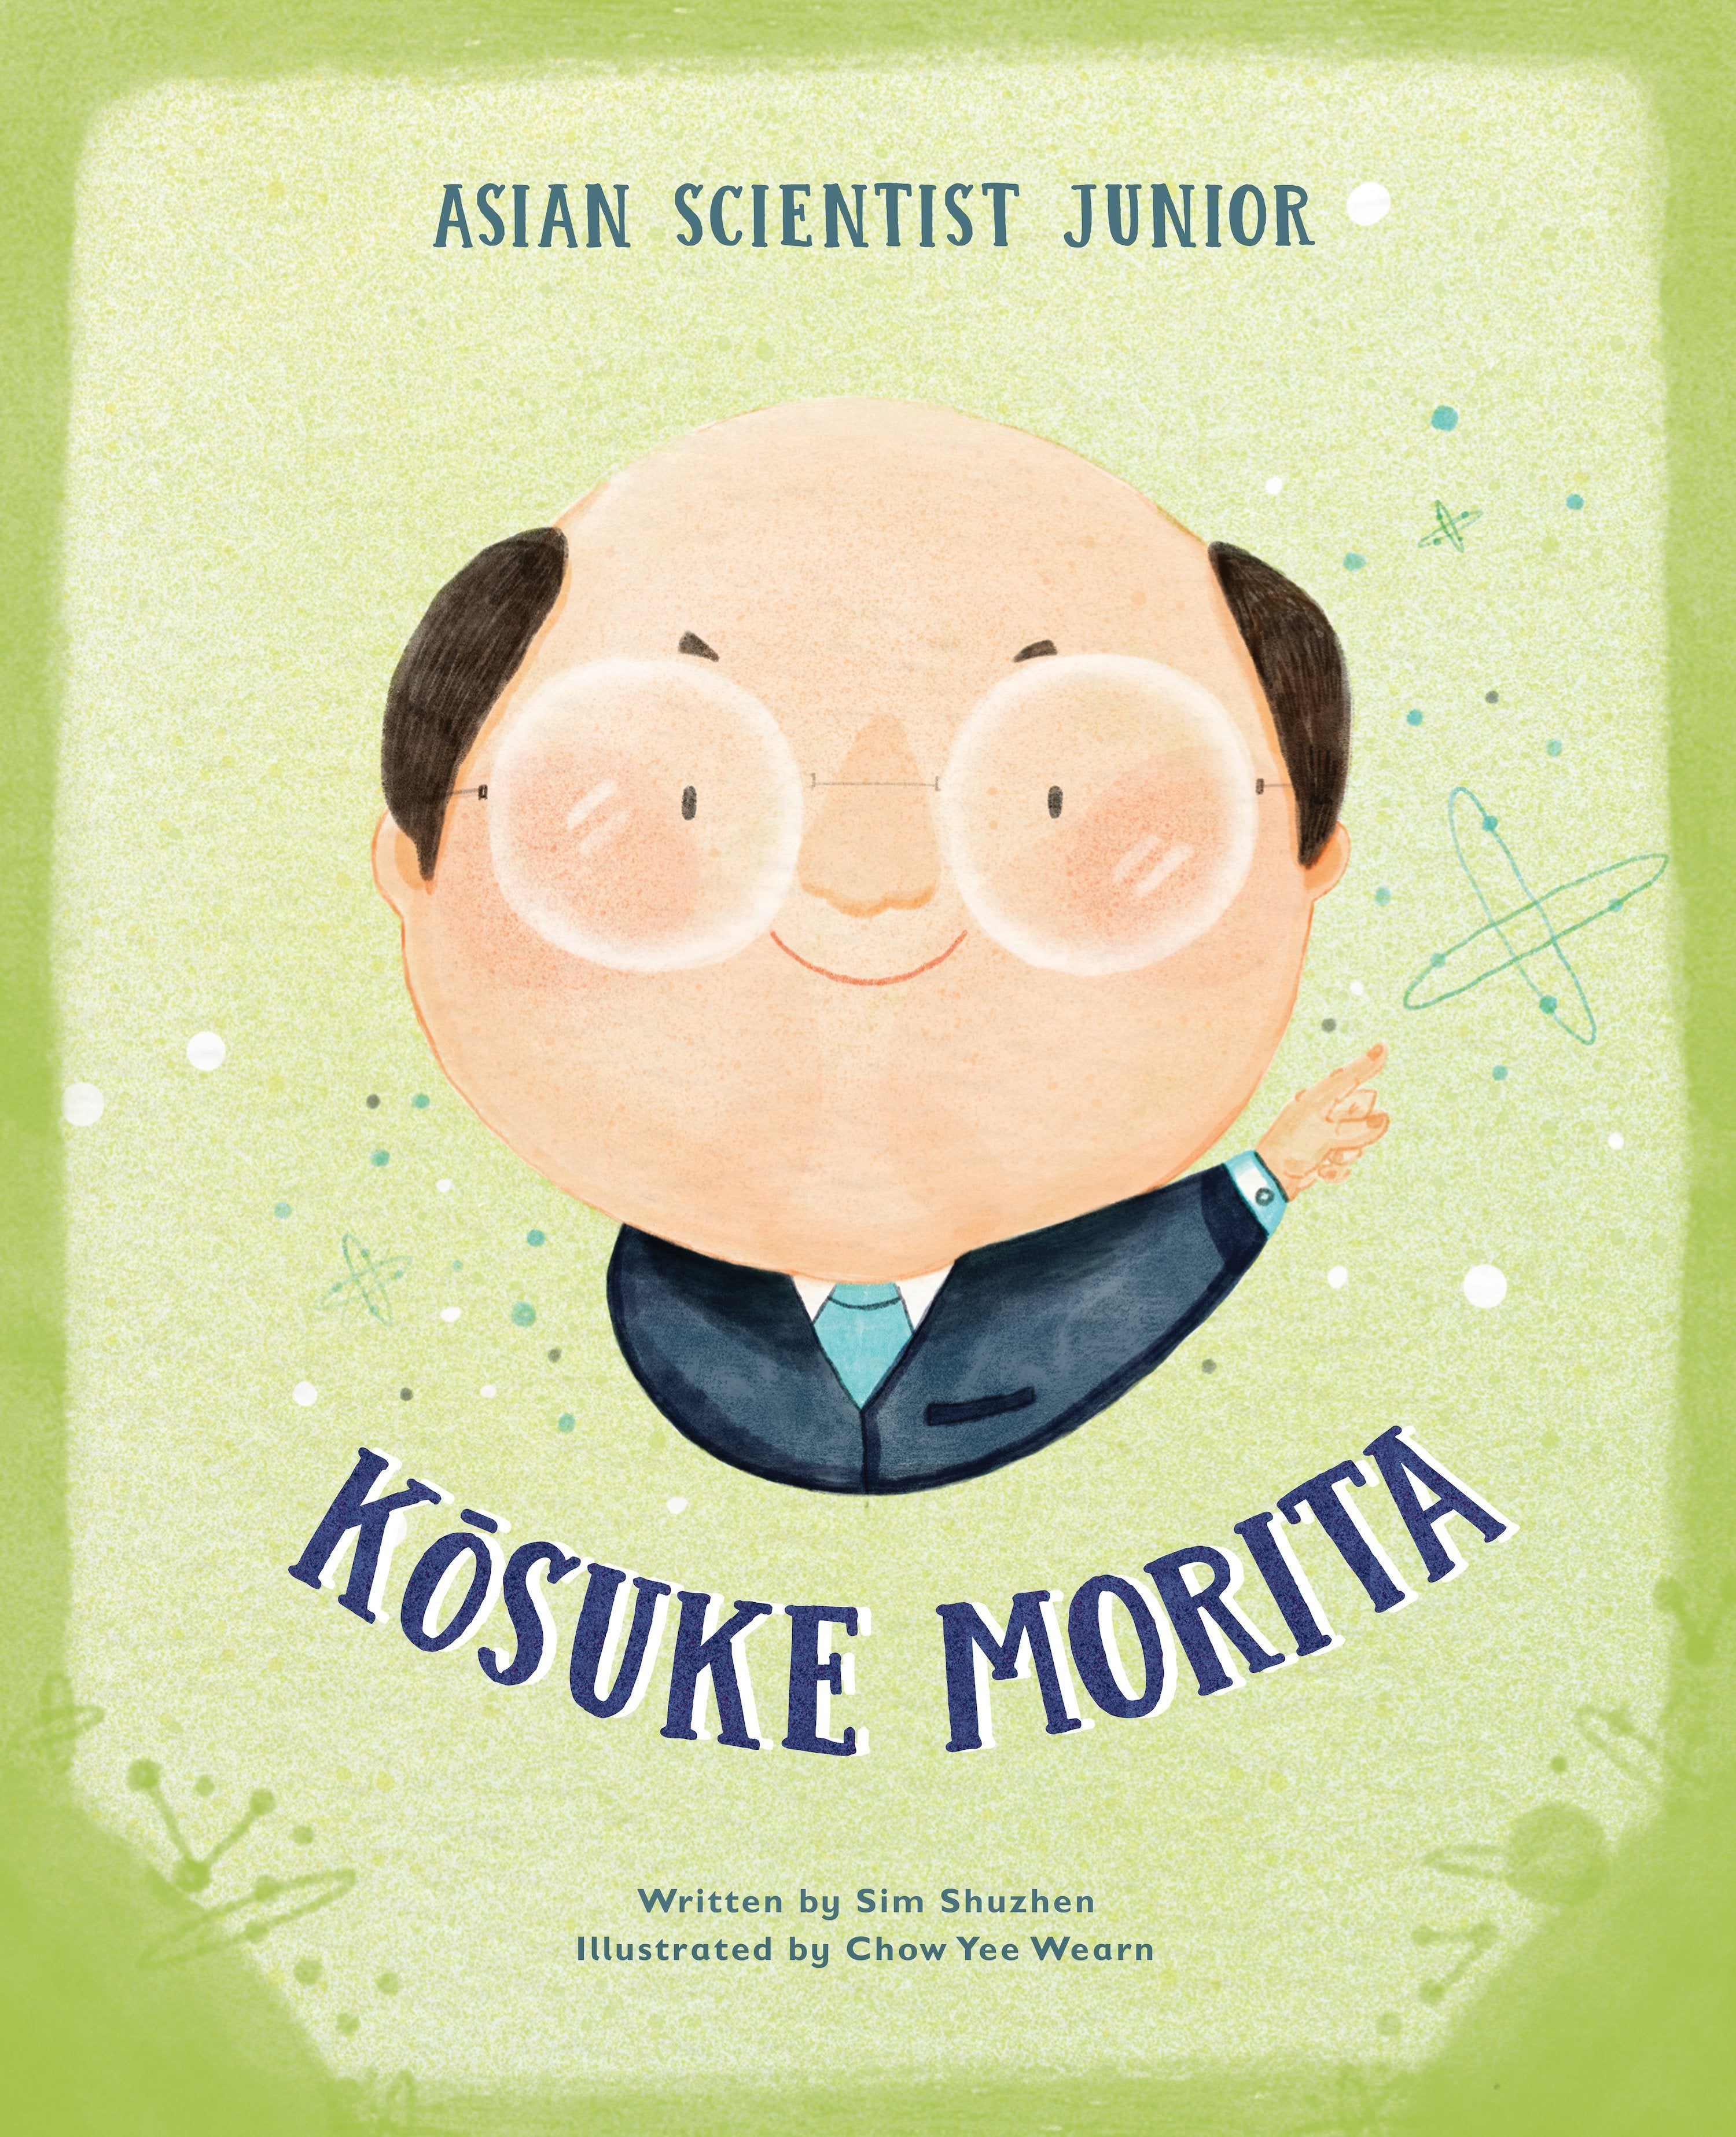 Asian Scientist Junior: Kōsuke Morita